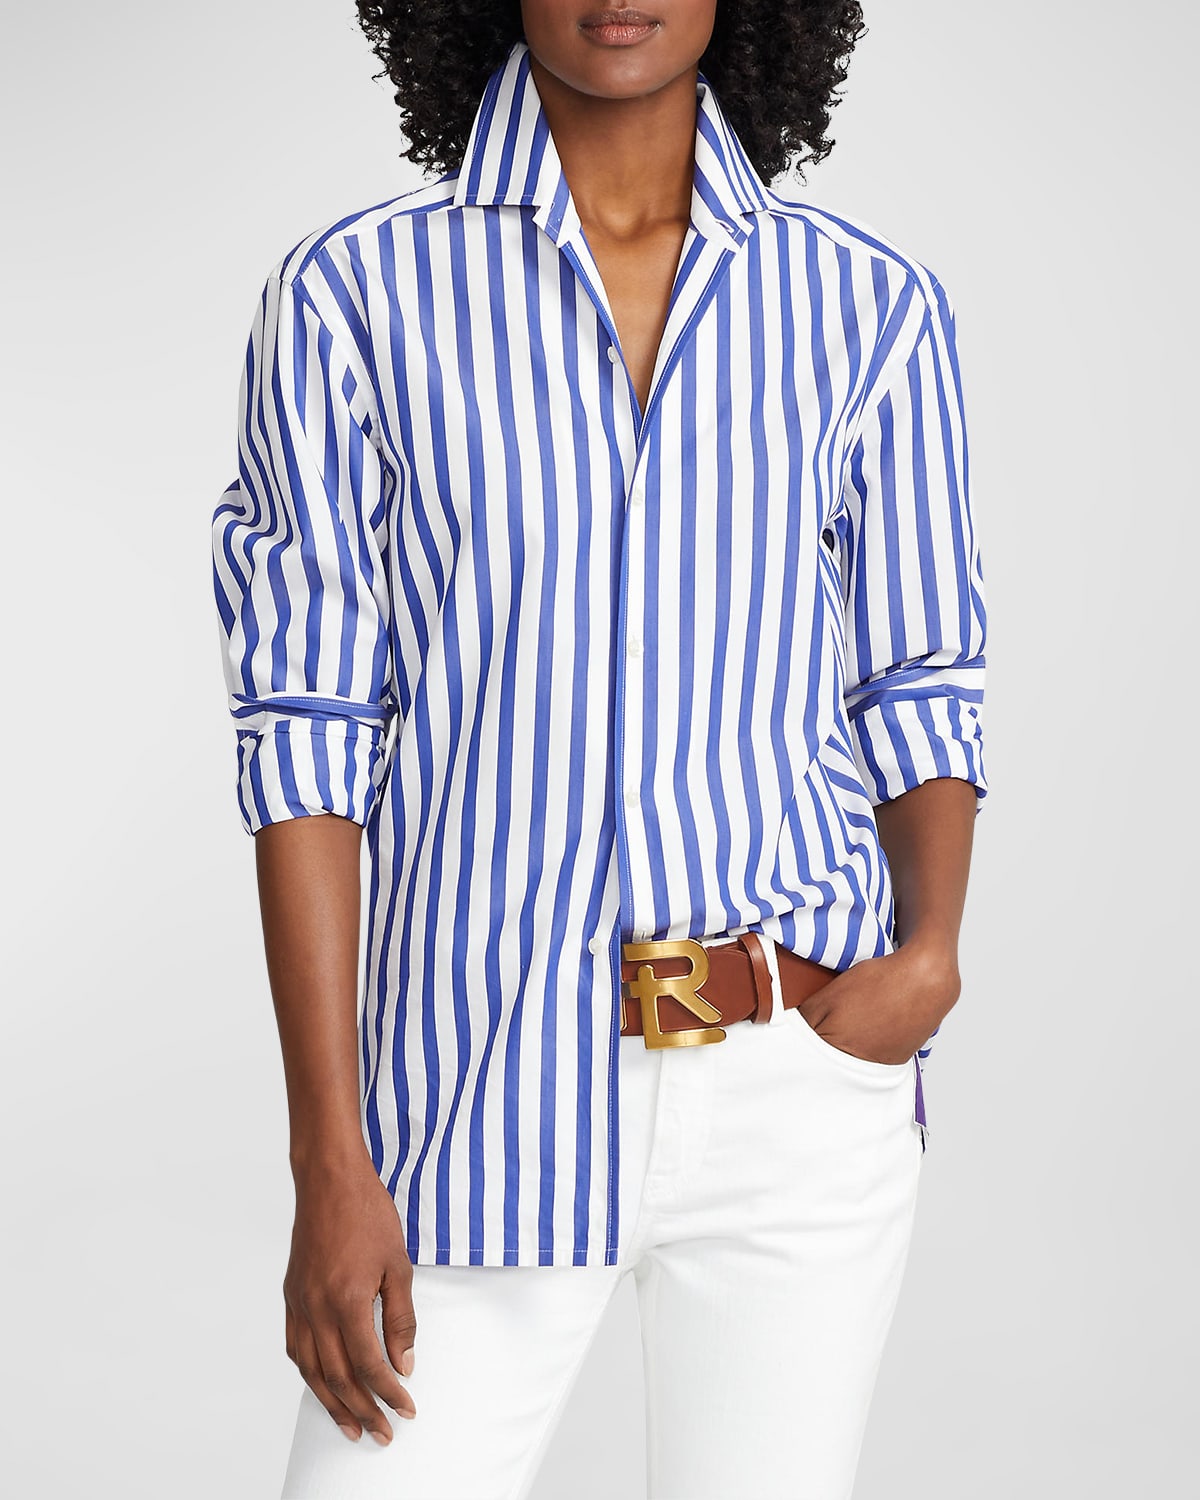 Ralph Lauren Iconic Style Capri Striped Cotton Shirt In White